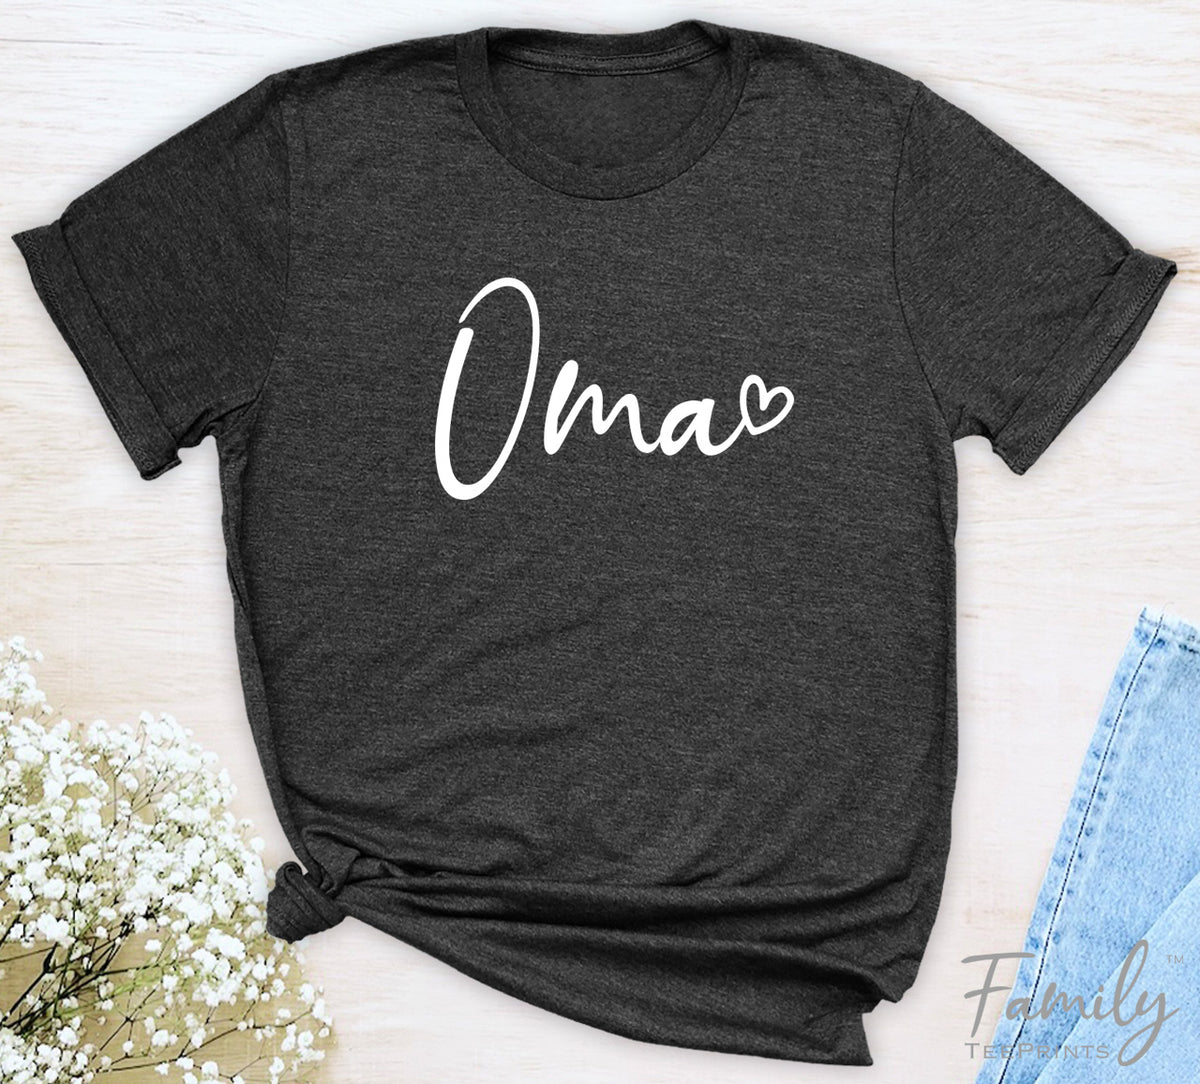 Oma Heart - Unisex T-shirt - Oma Shirt - Gift For New Oma - familyteeprints